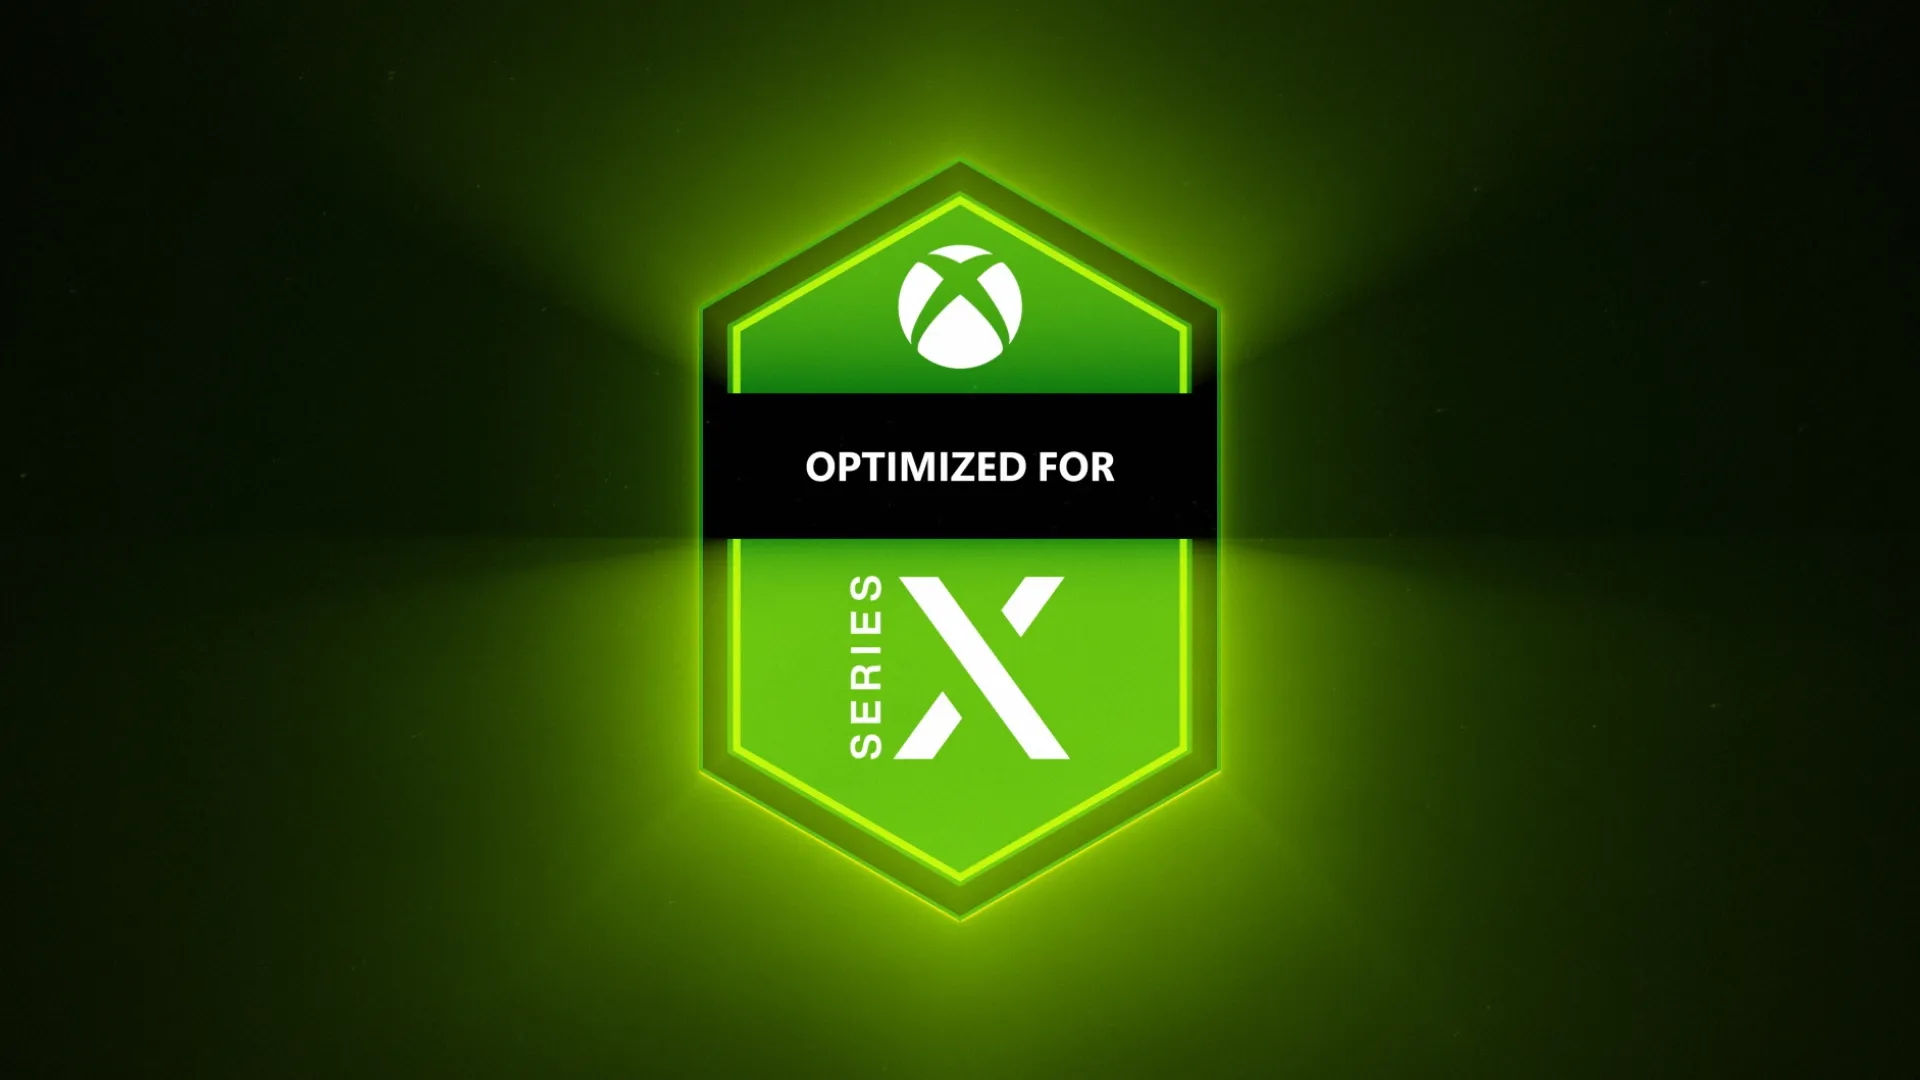 xbox series x optimized 1080p cleanf1593153352